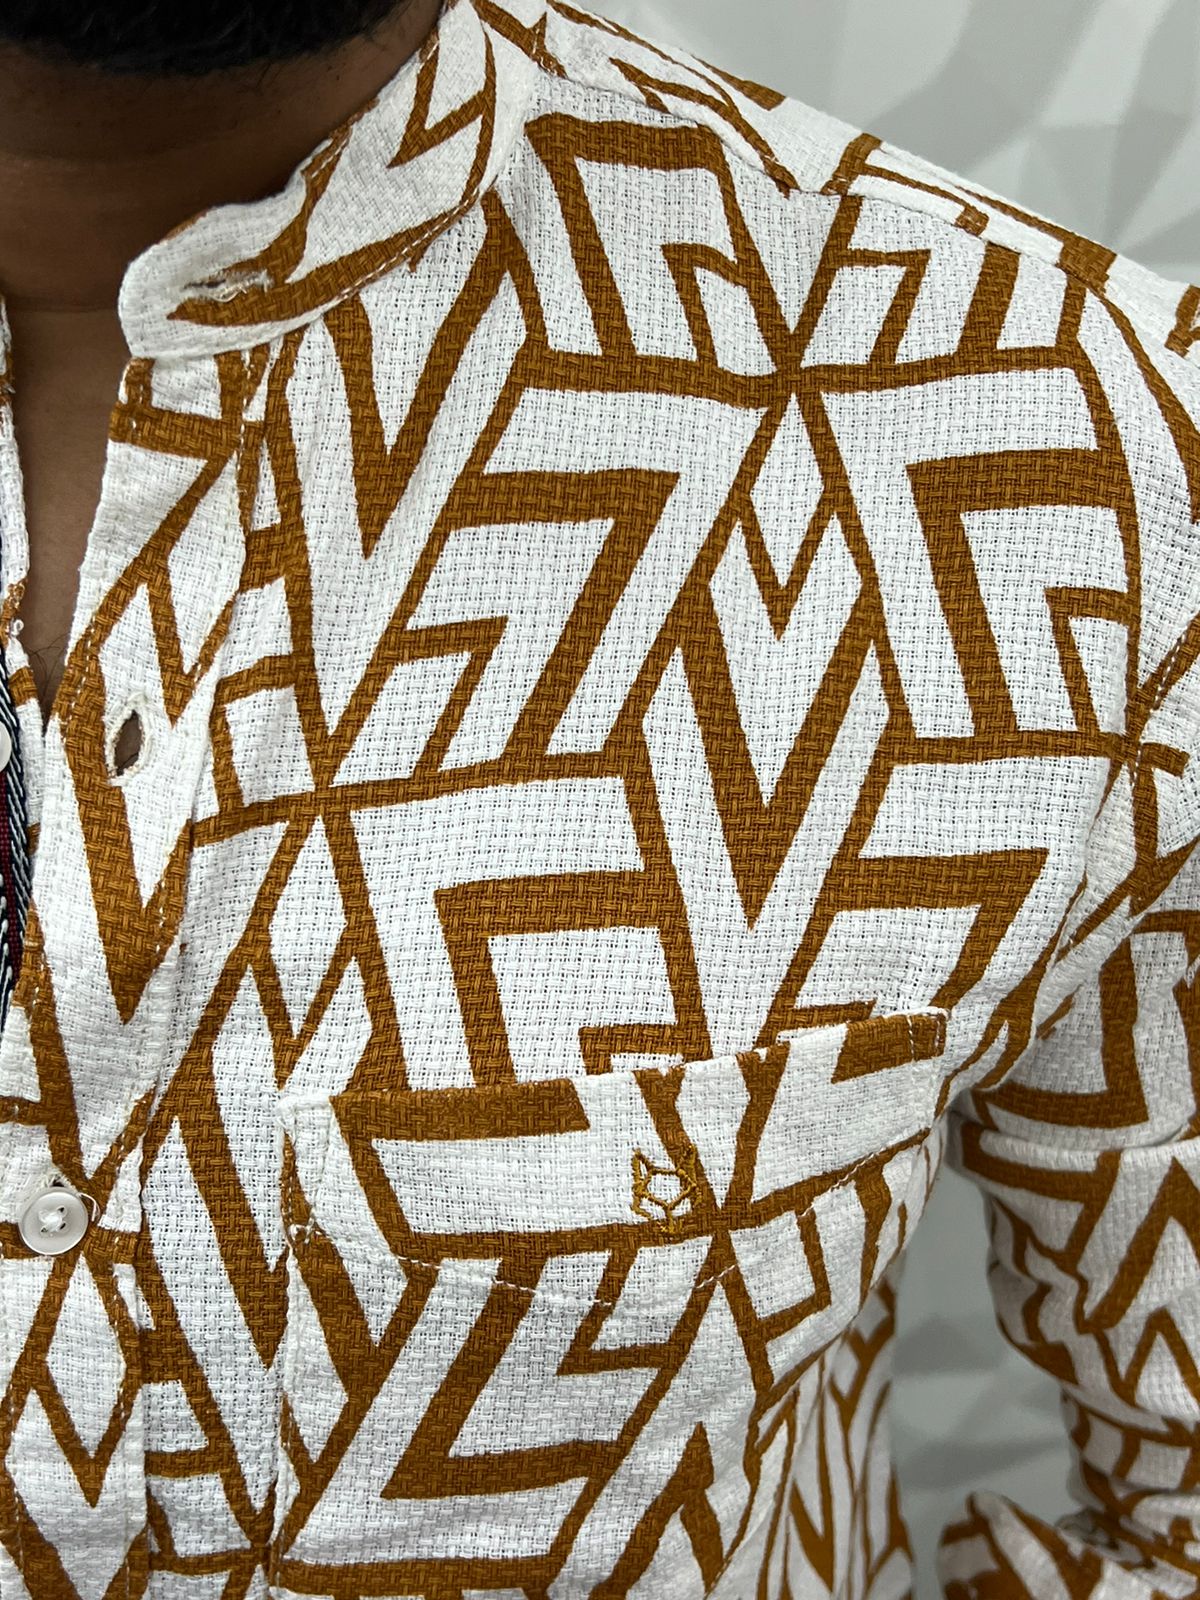 Mandarin collar abstract print shirt